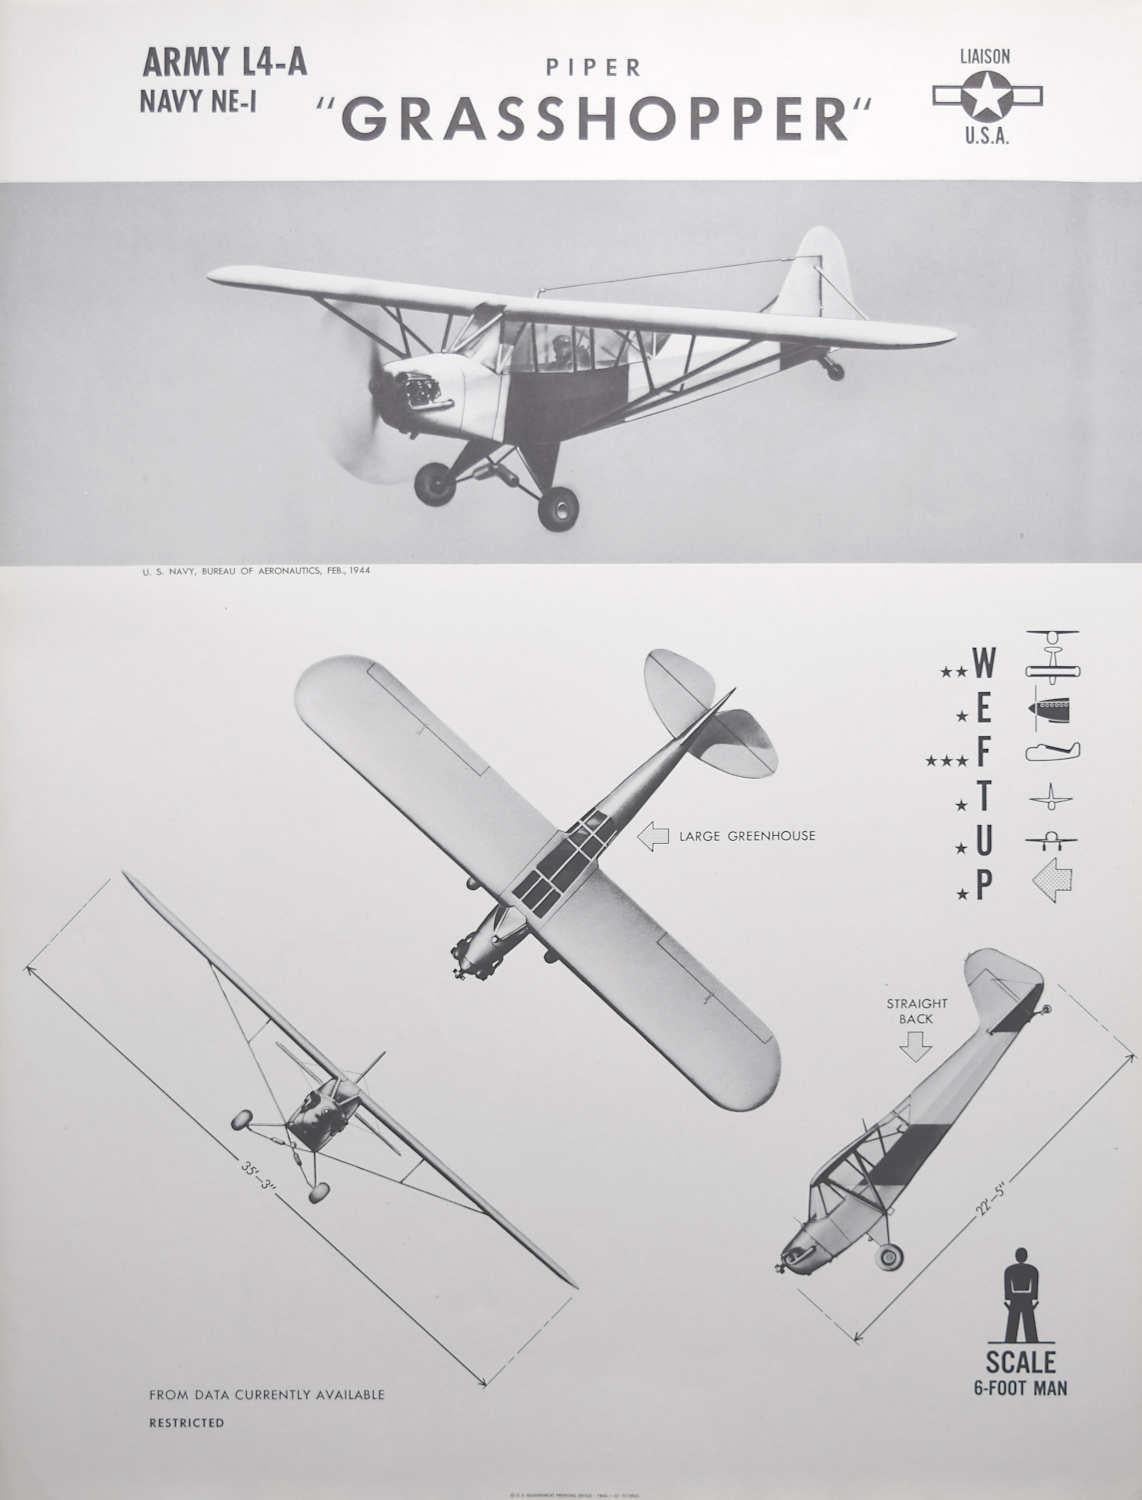 1942 Piper "Grasshopper" USA liaison plane identification poster WW2 - Print by Unknown